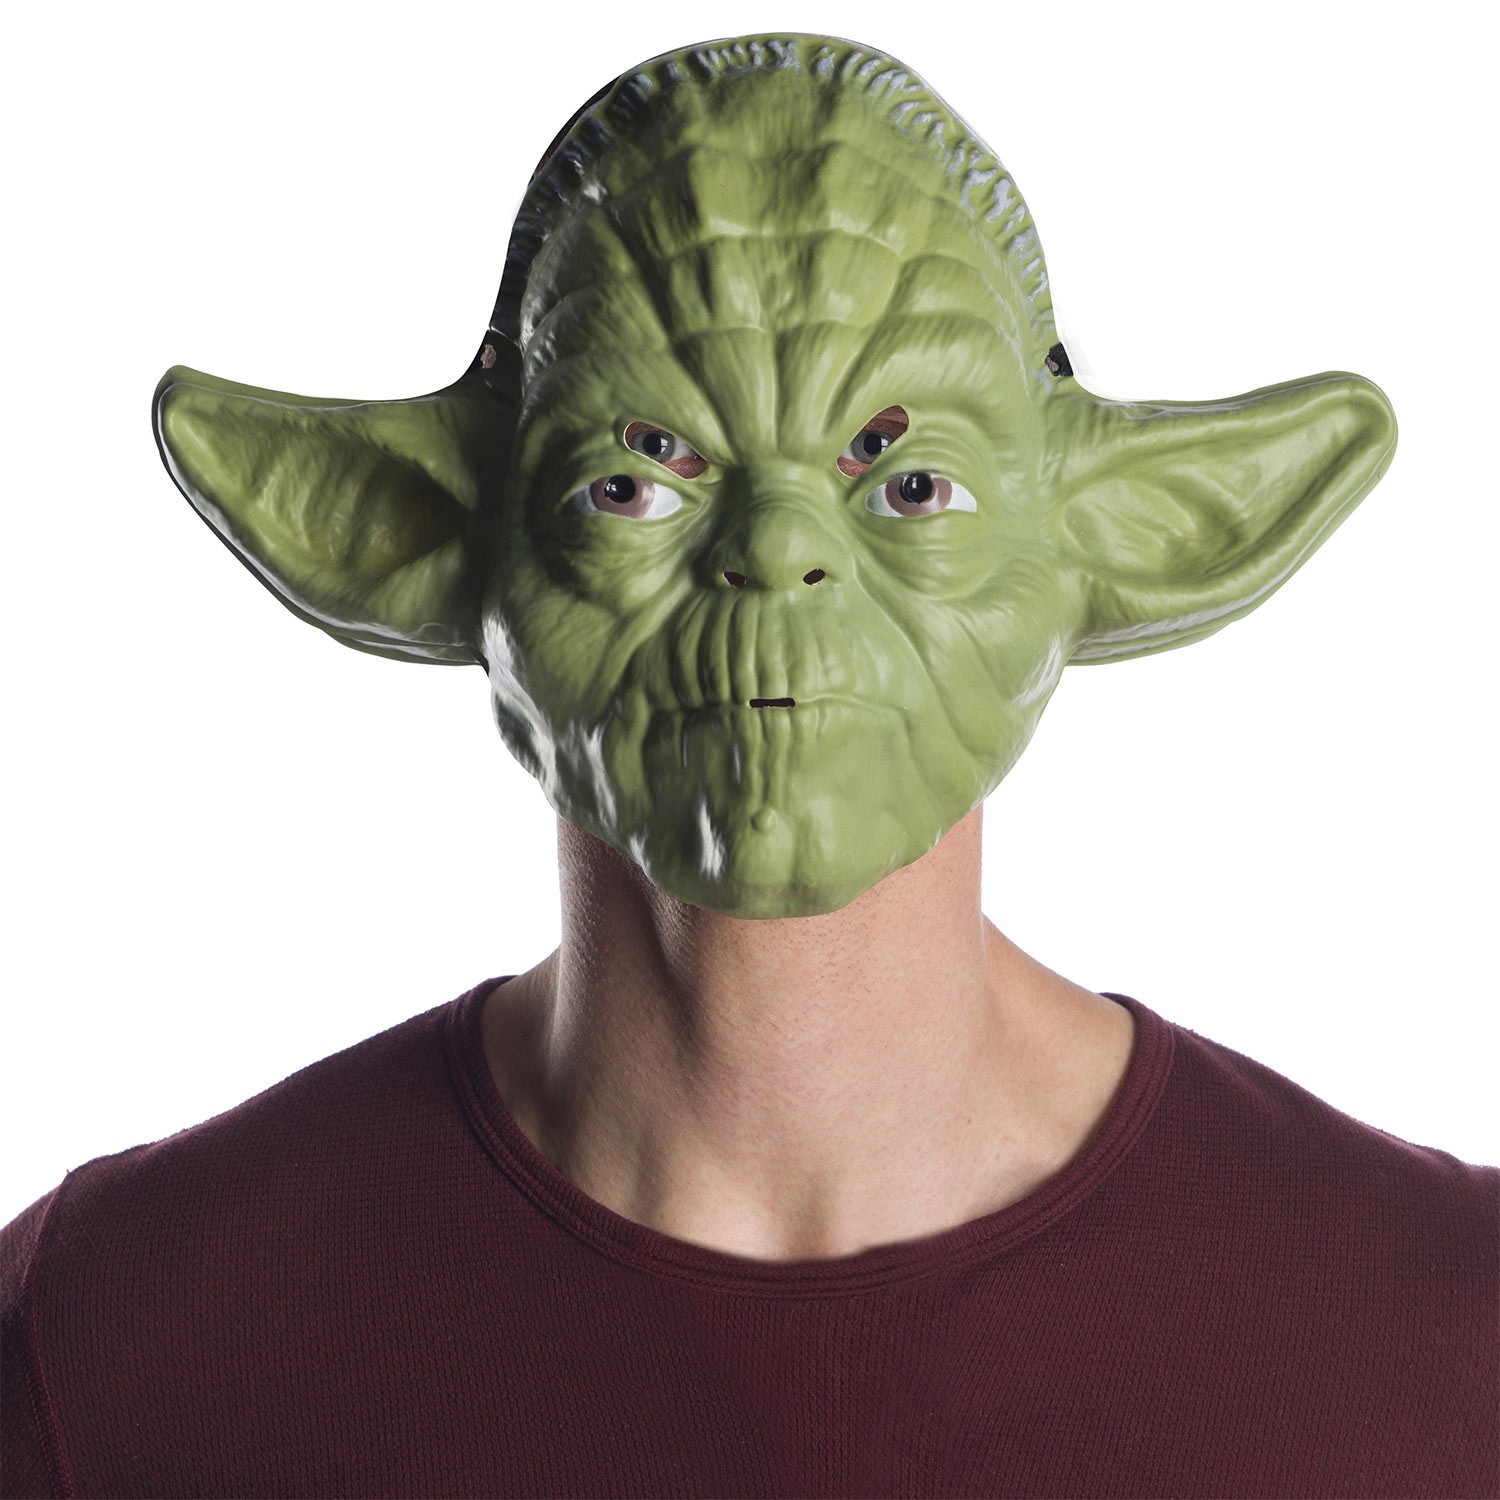 Star Wars Yoda Vacuform Mask